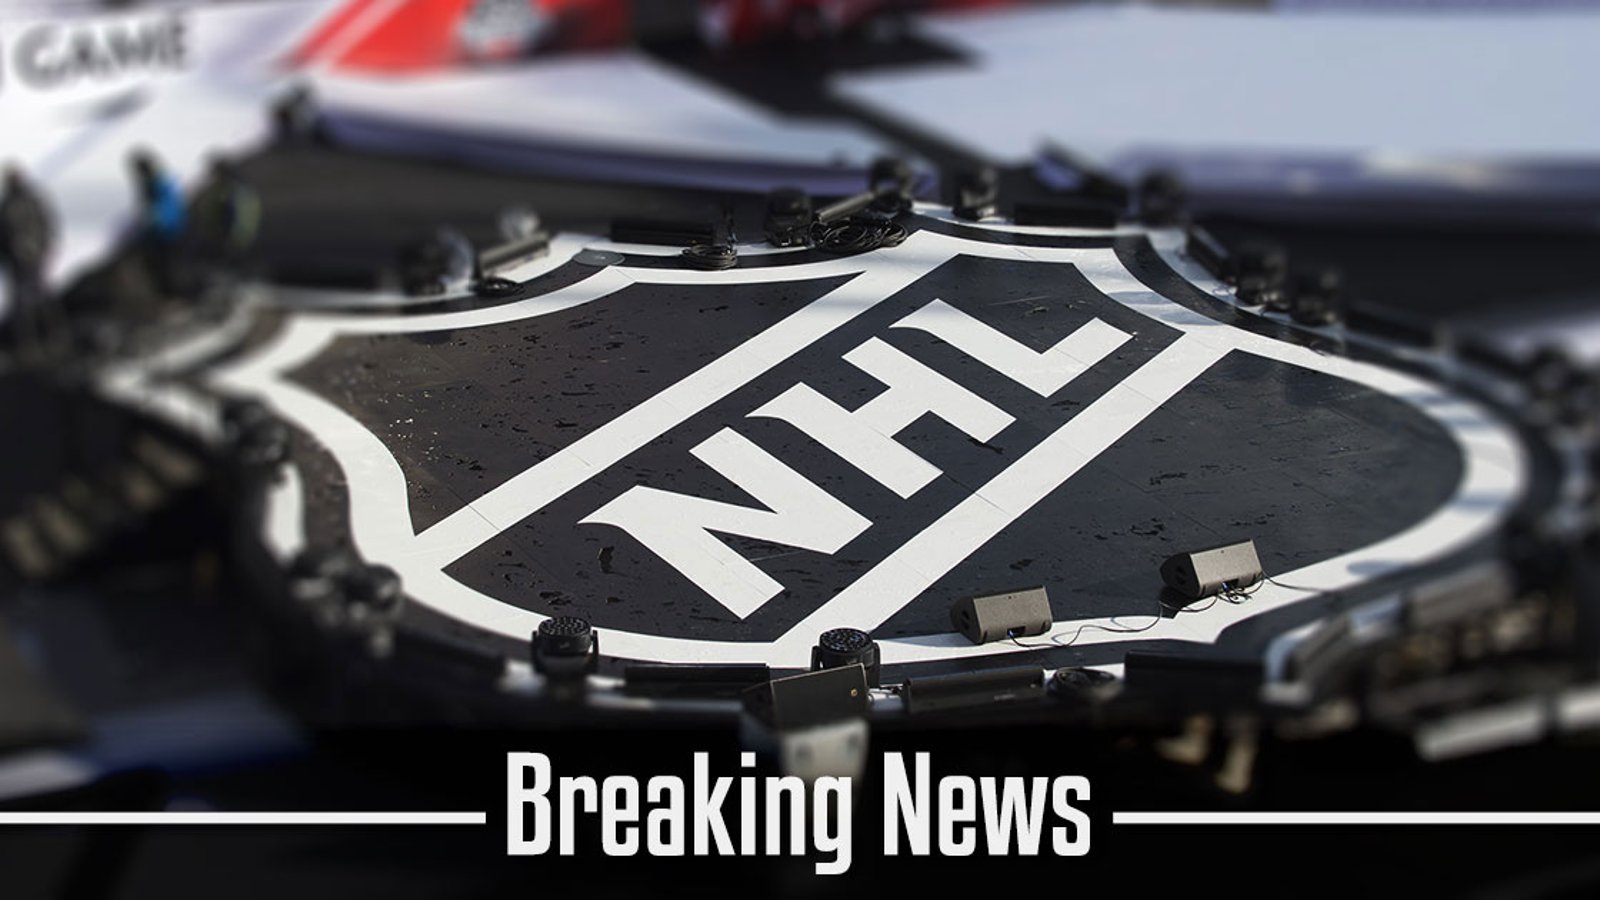 BREAKING: NHL superstar miss World to undergo surgery after tough Playoffs stretch.